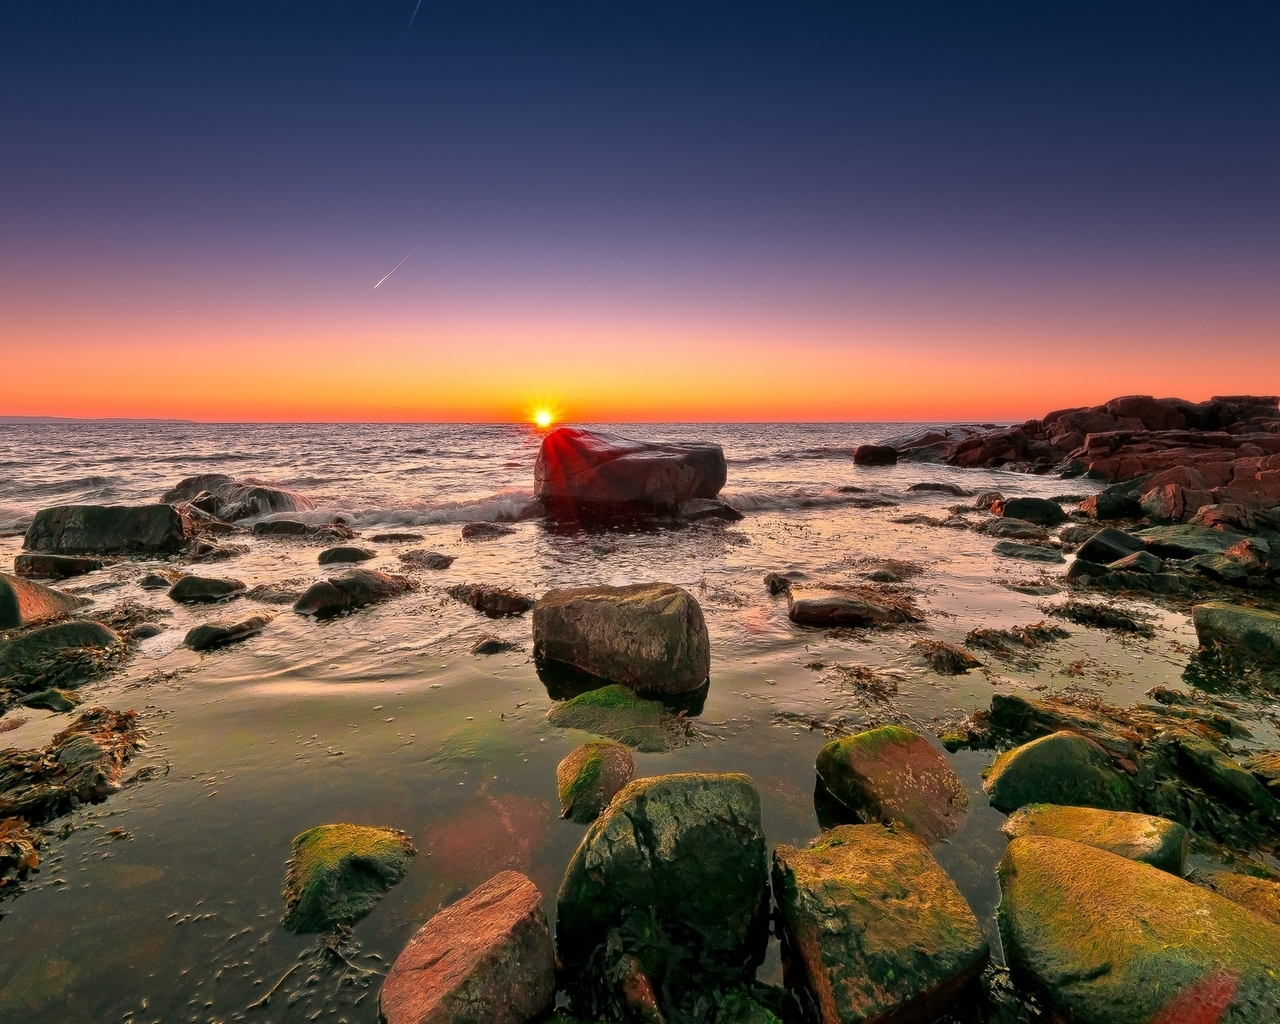 Картинка: Море, берег, камни, закат, горизонт, солнце